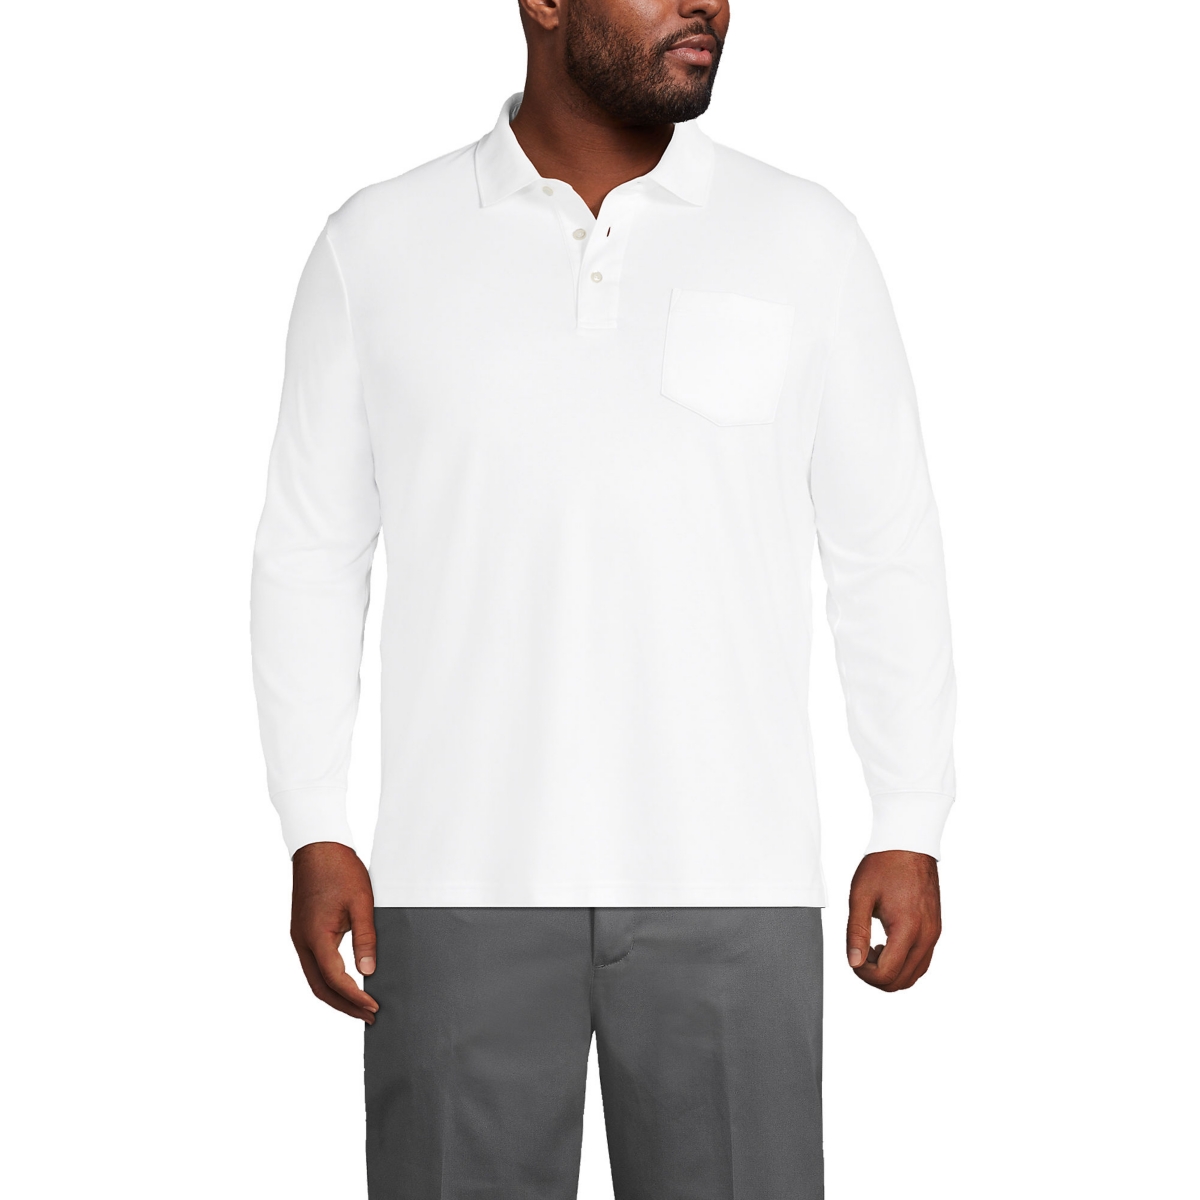 Big & Tall Long Sleeve Cotton Supima Polo Shirt with Pocket - White